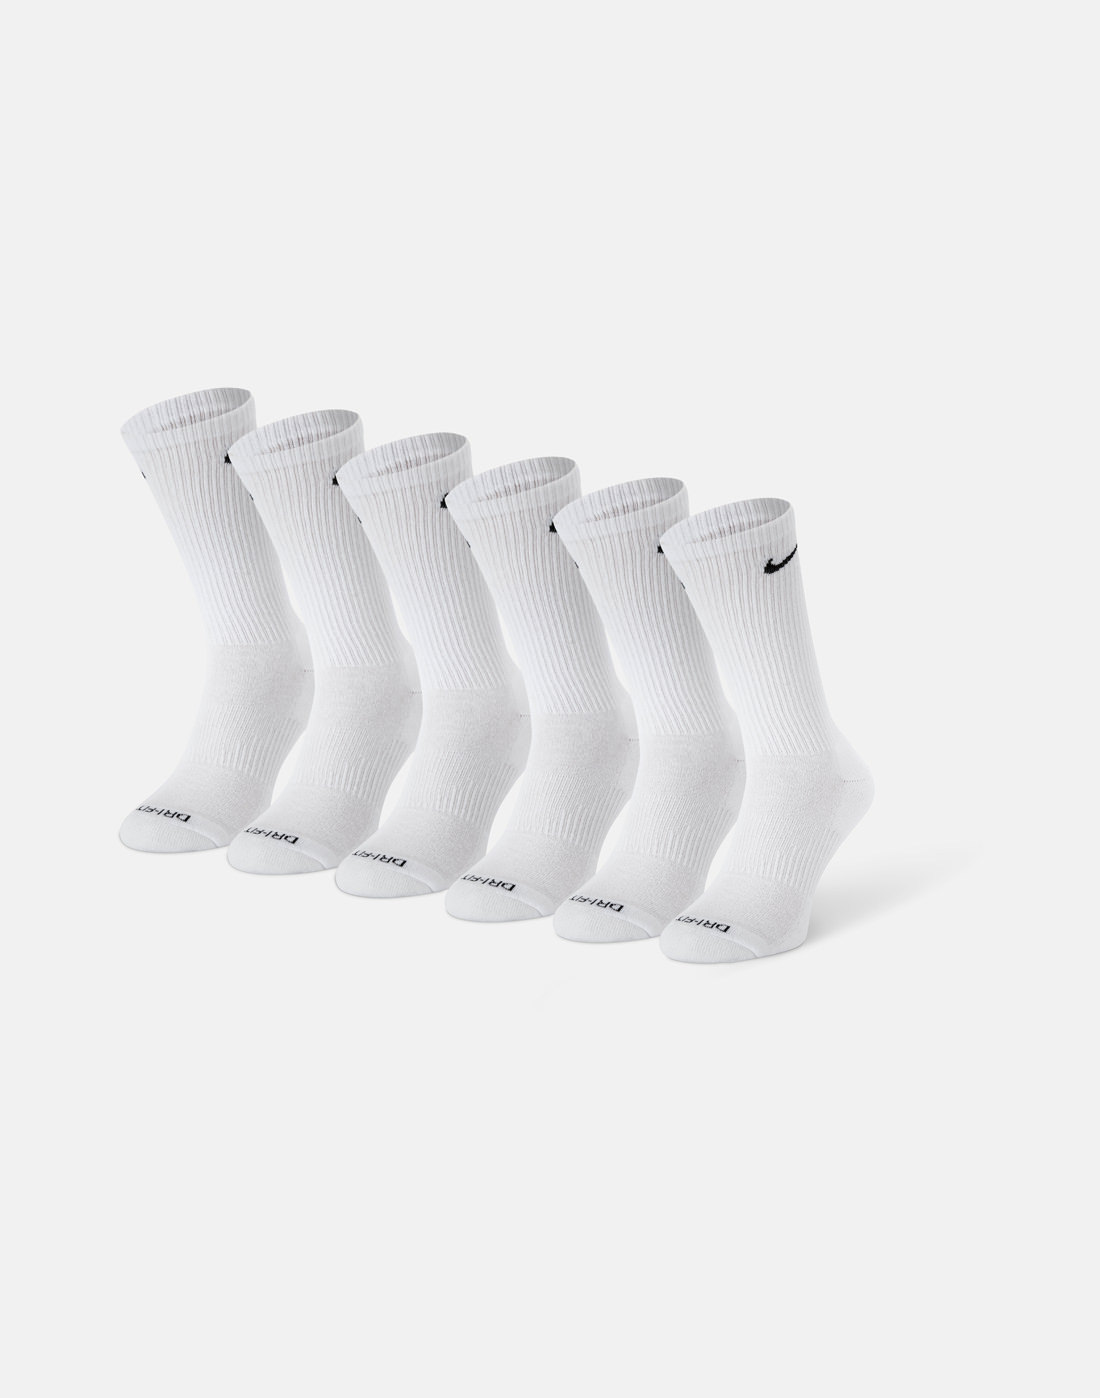 Nike Everyday Cushion 6 Pack Crew Socks - White | Life Style Sports IE